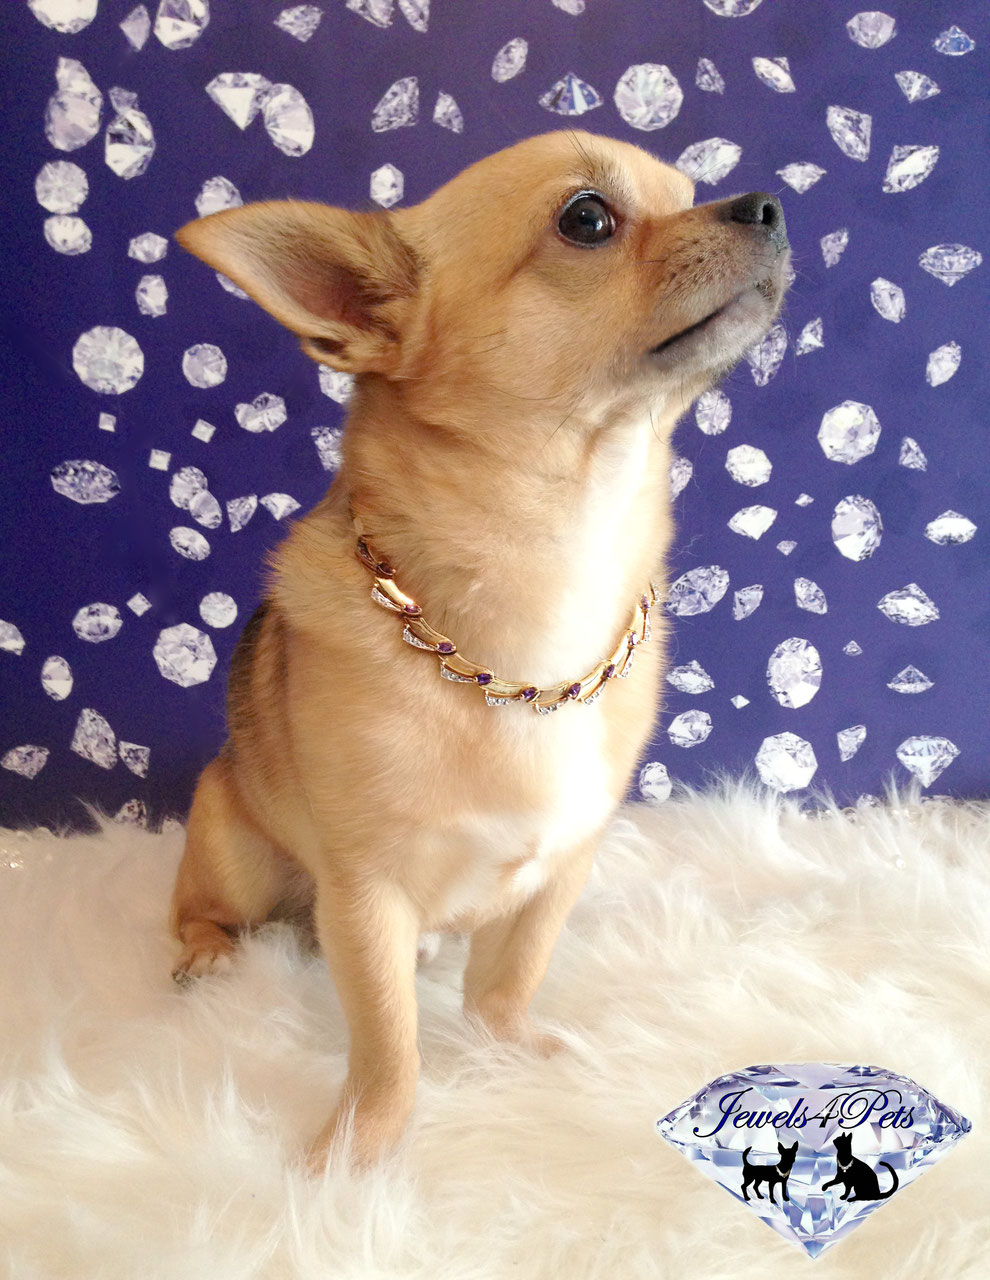 Jewels4Pets dog necklace Monaco multi colour crystal dog collar strass dog jewelry adjustable size 7-12 inch SML dog wedding jewelry